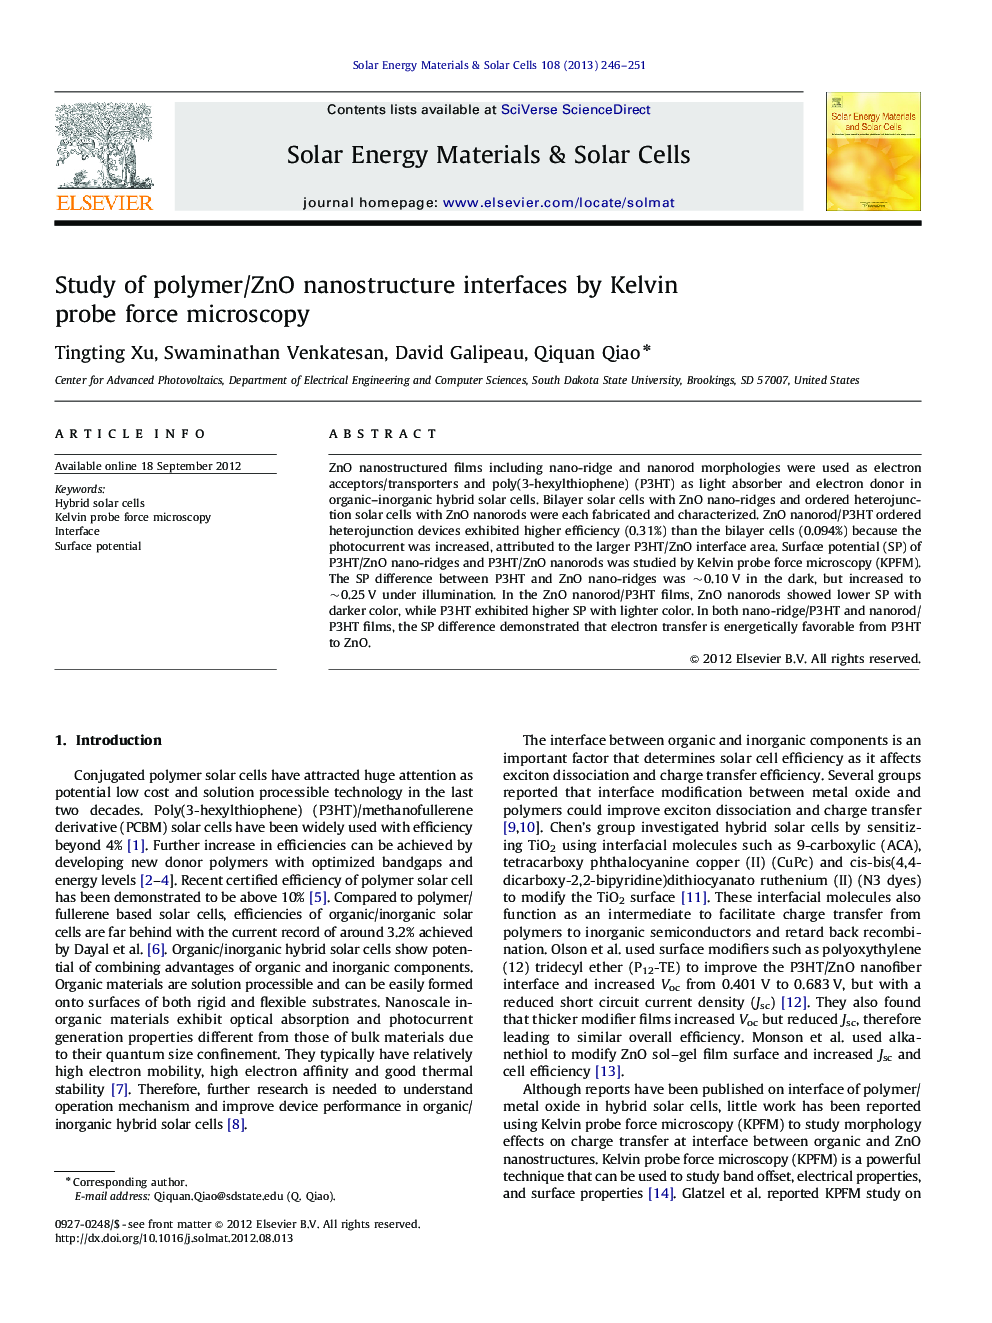 Study of polymer/ZnO nanostructure interfaces by Kelvin probe force microscopy